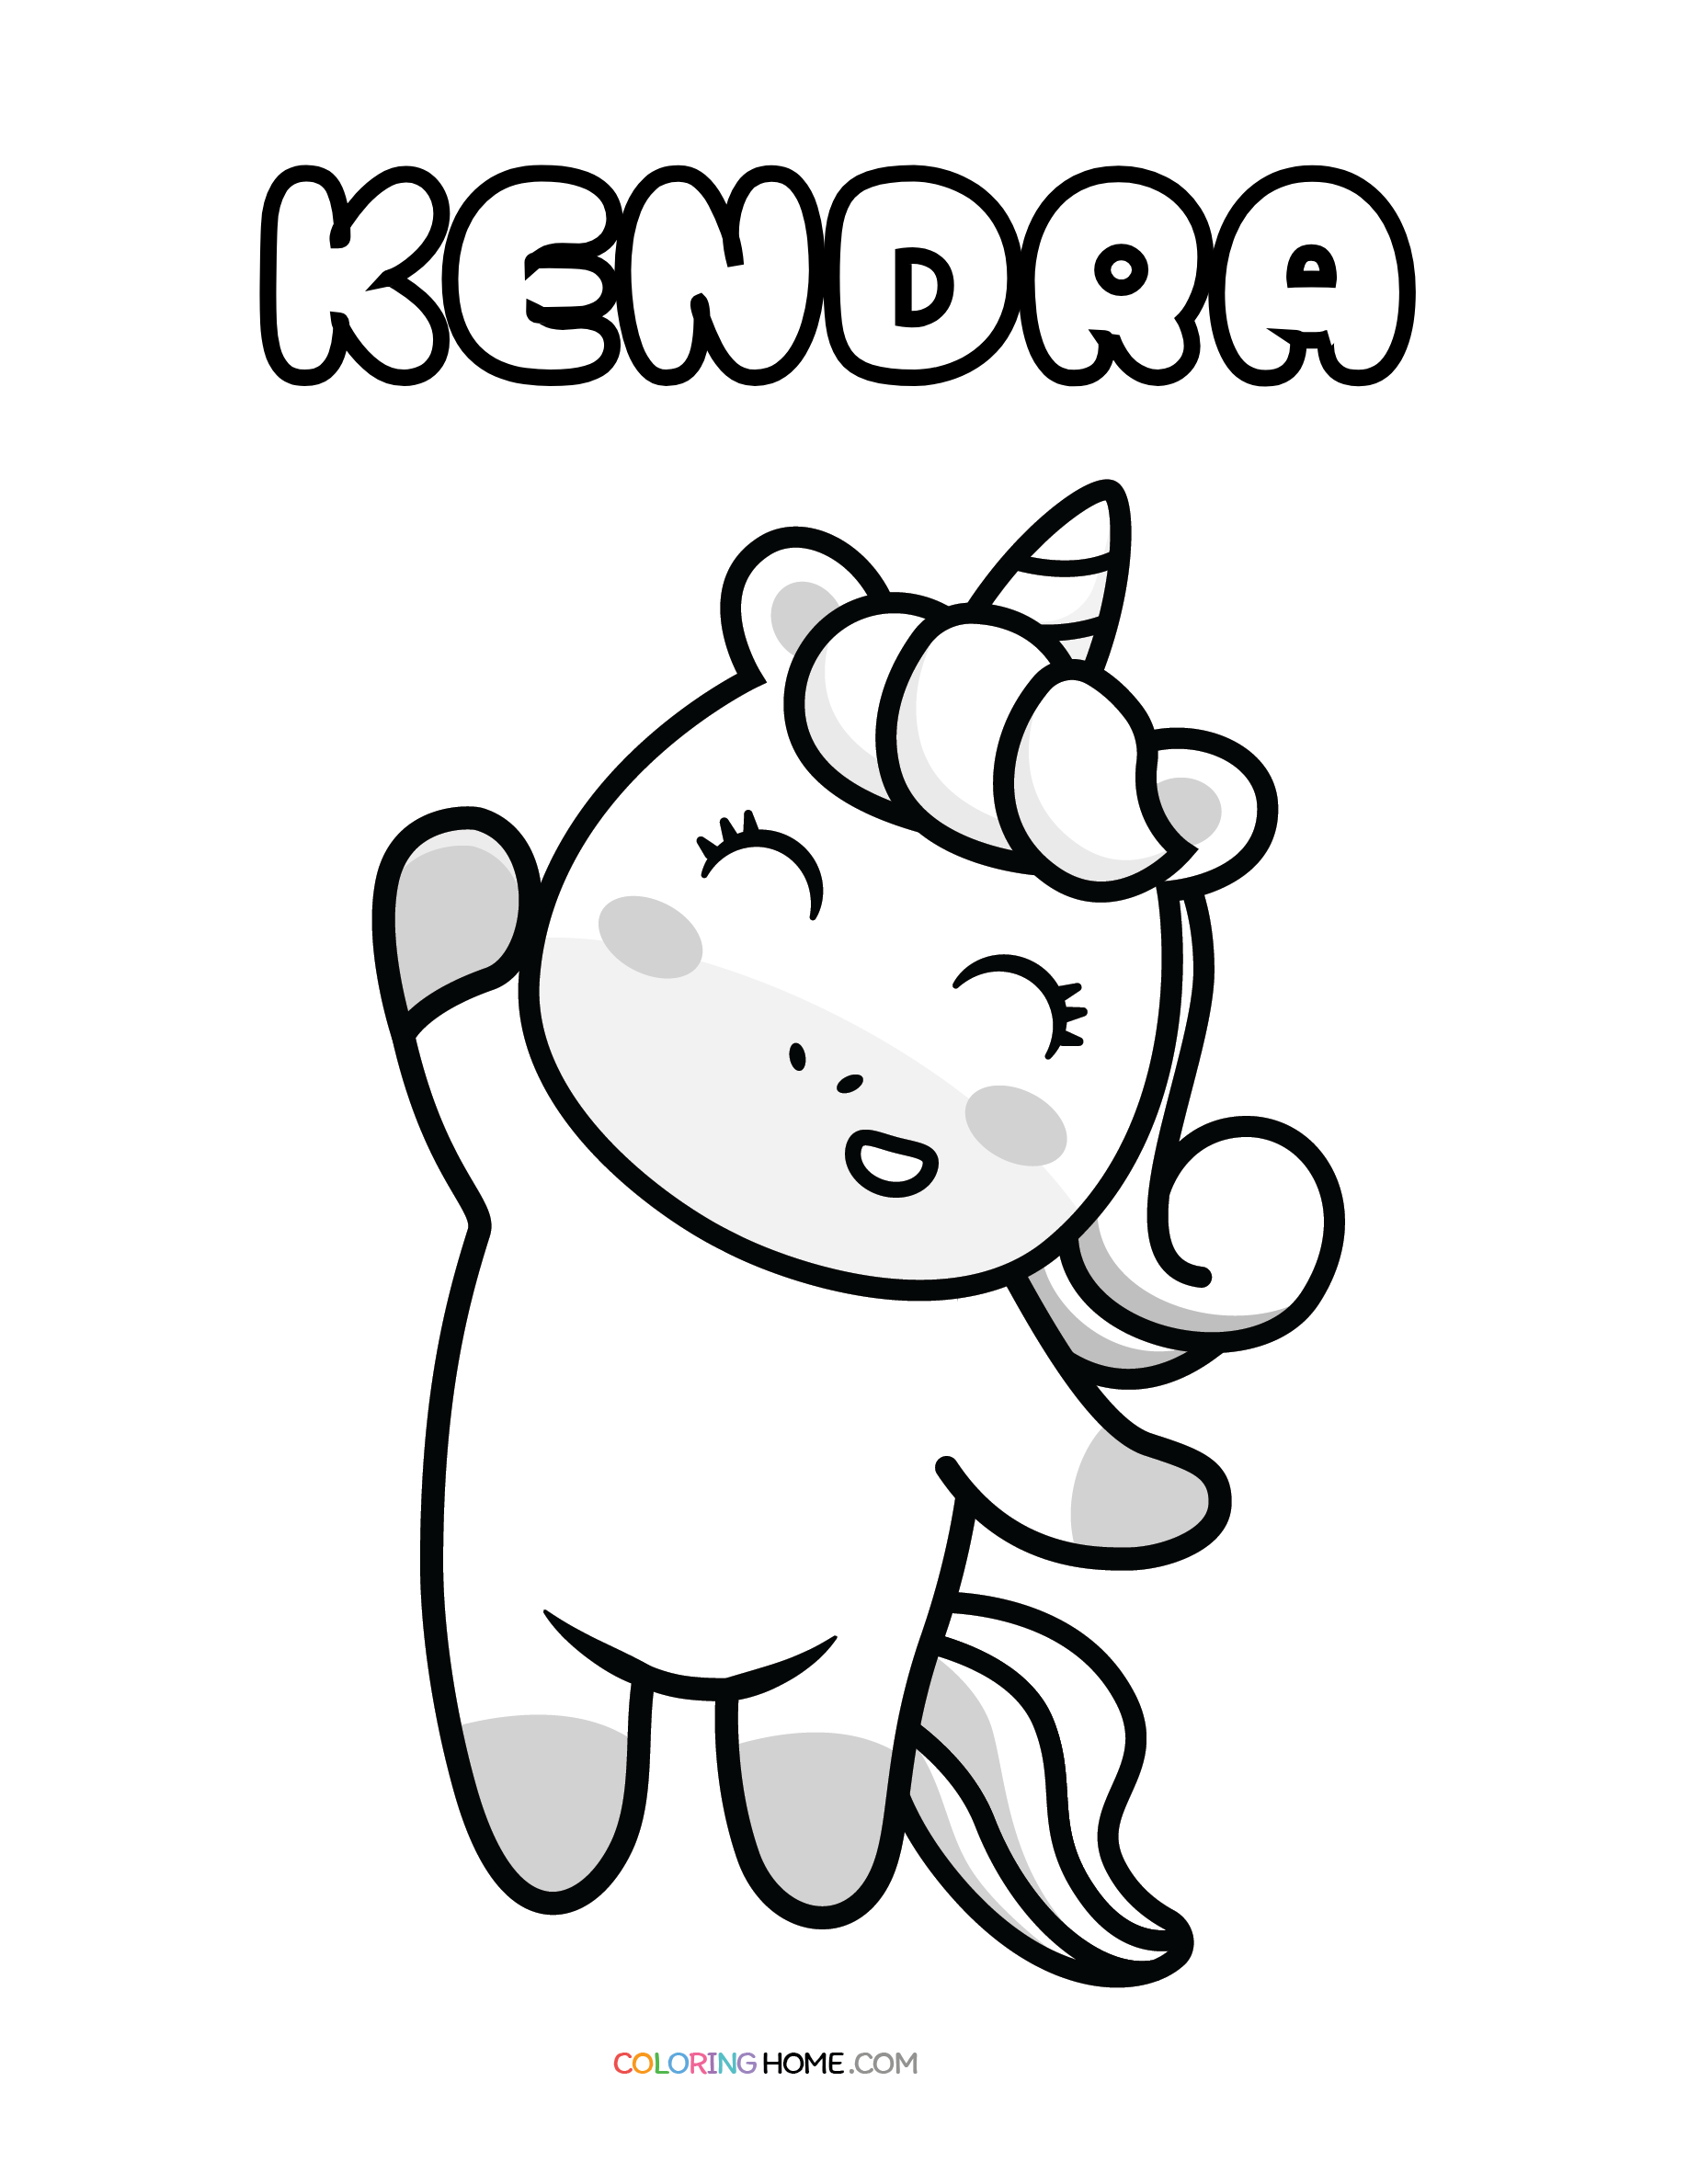 Kendra unicorn coloring page